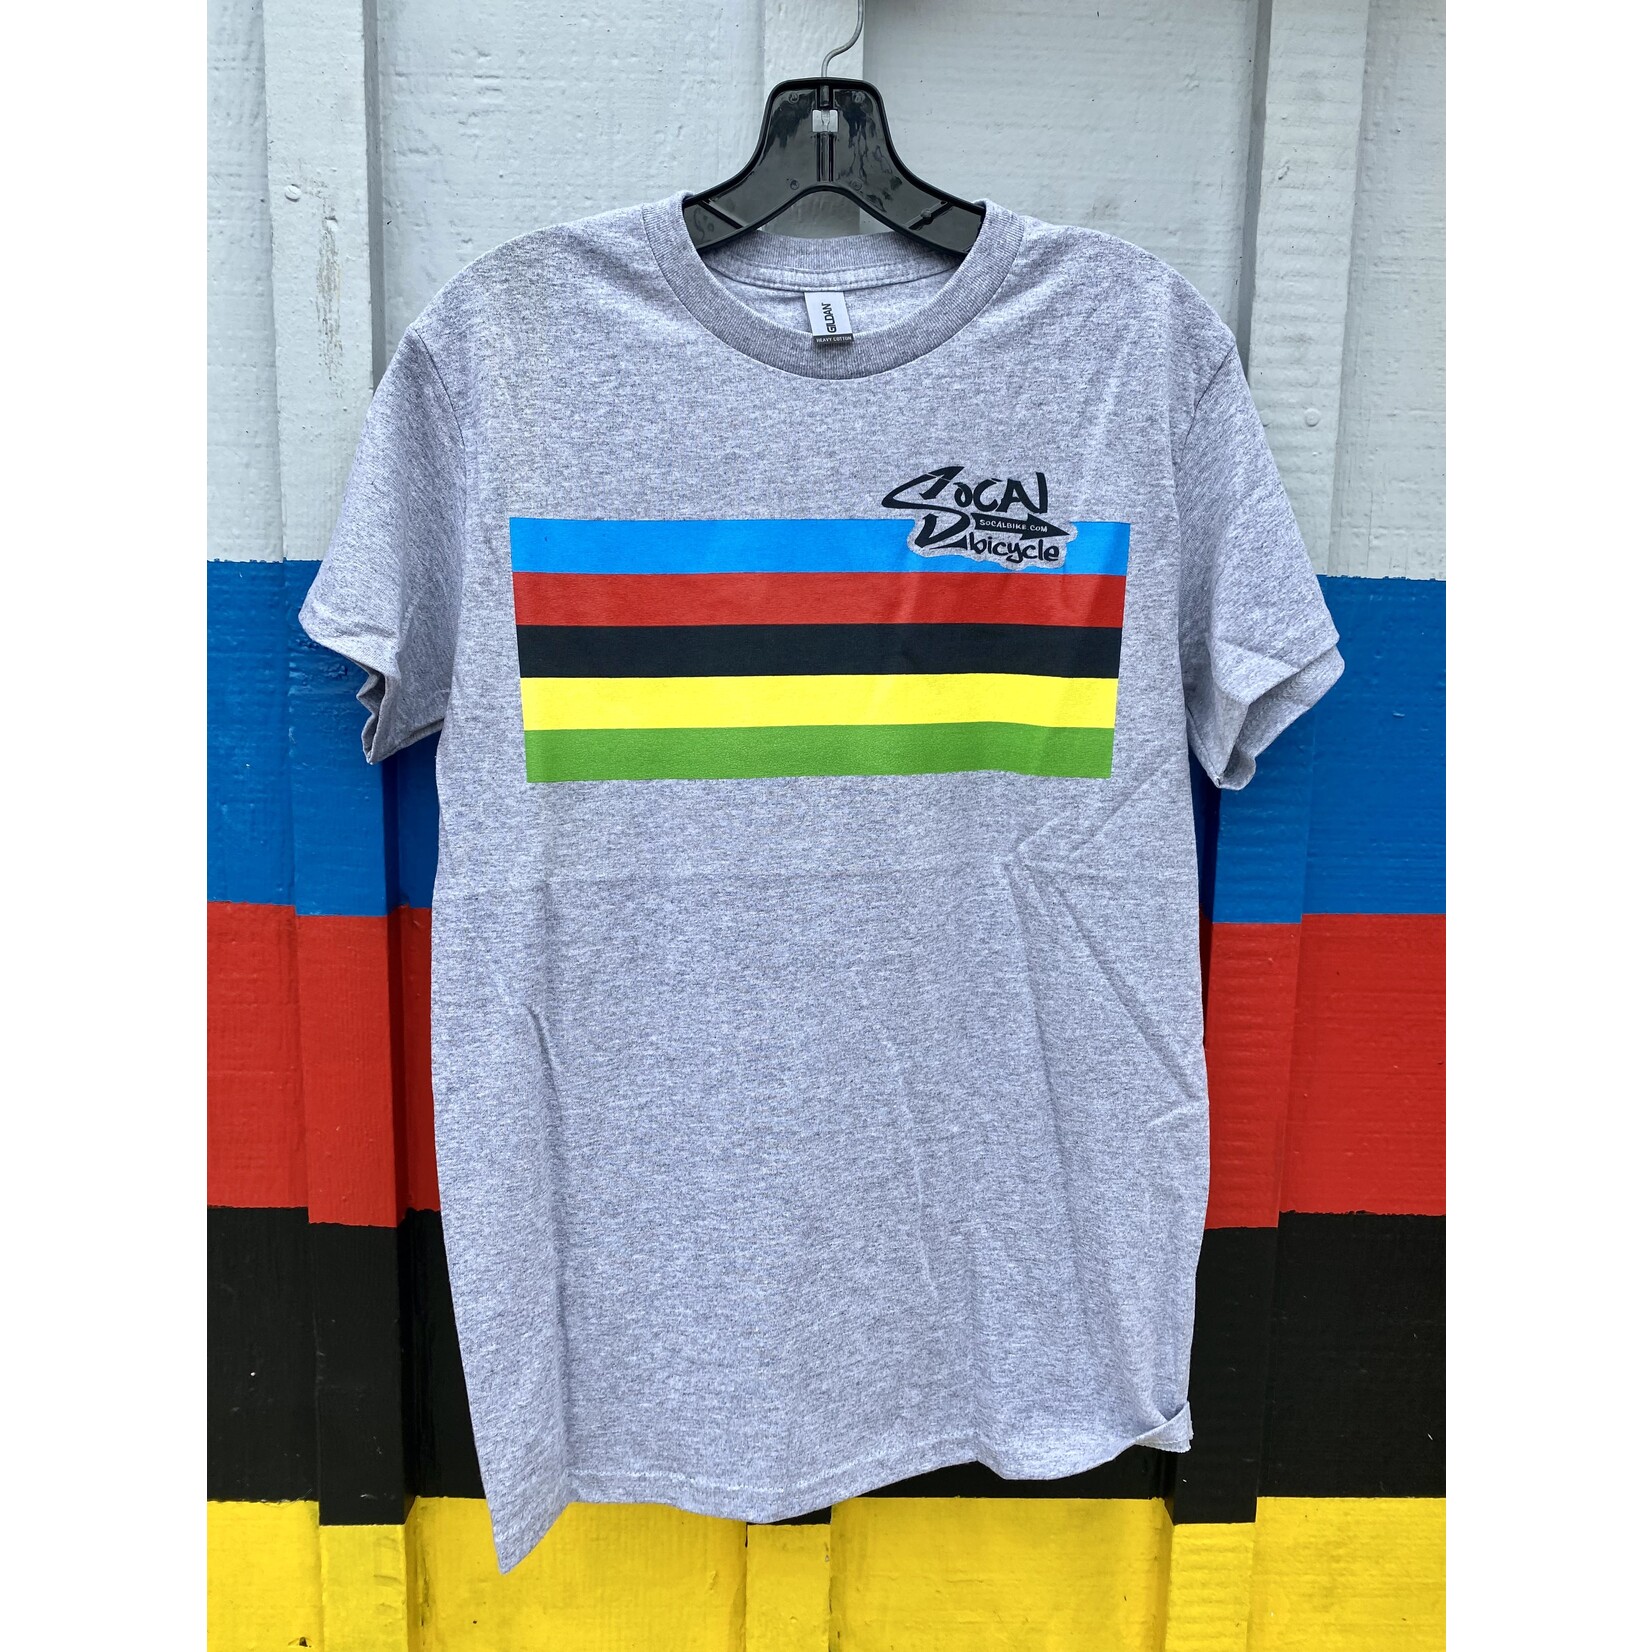 SoCal Bike SoCal Bicycle T-Shirt